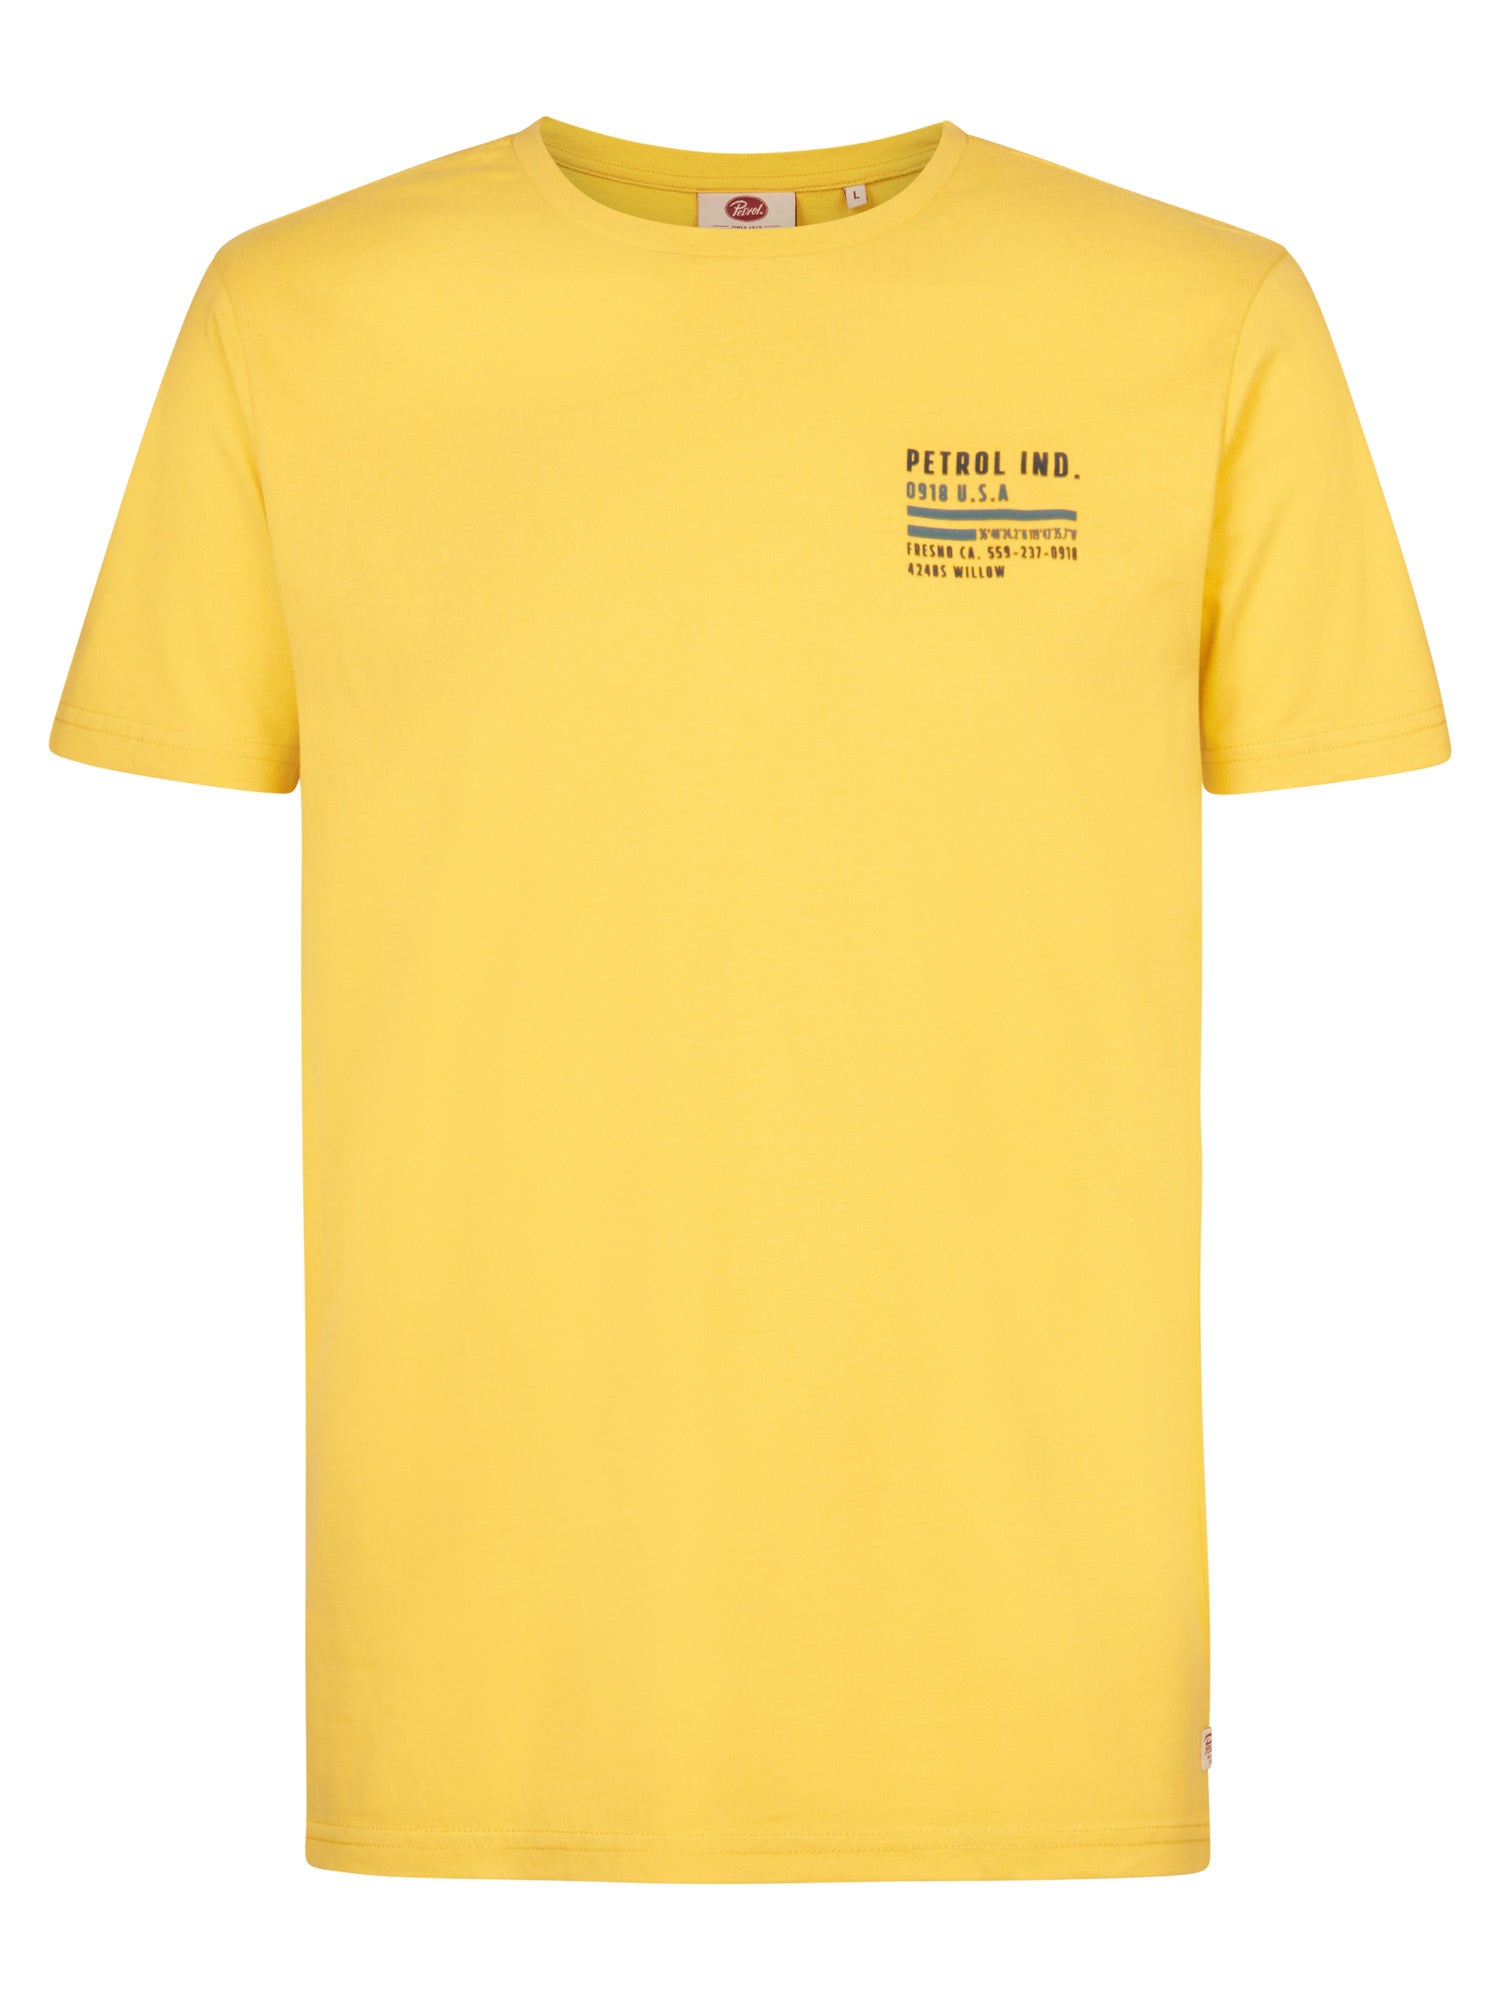 Petrol Industries Logo T-shirt Yellow Ochre - S